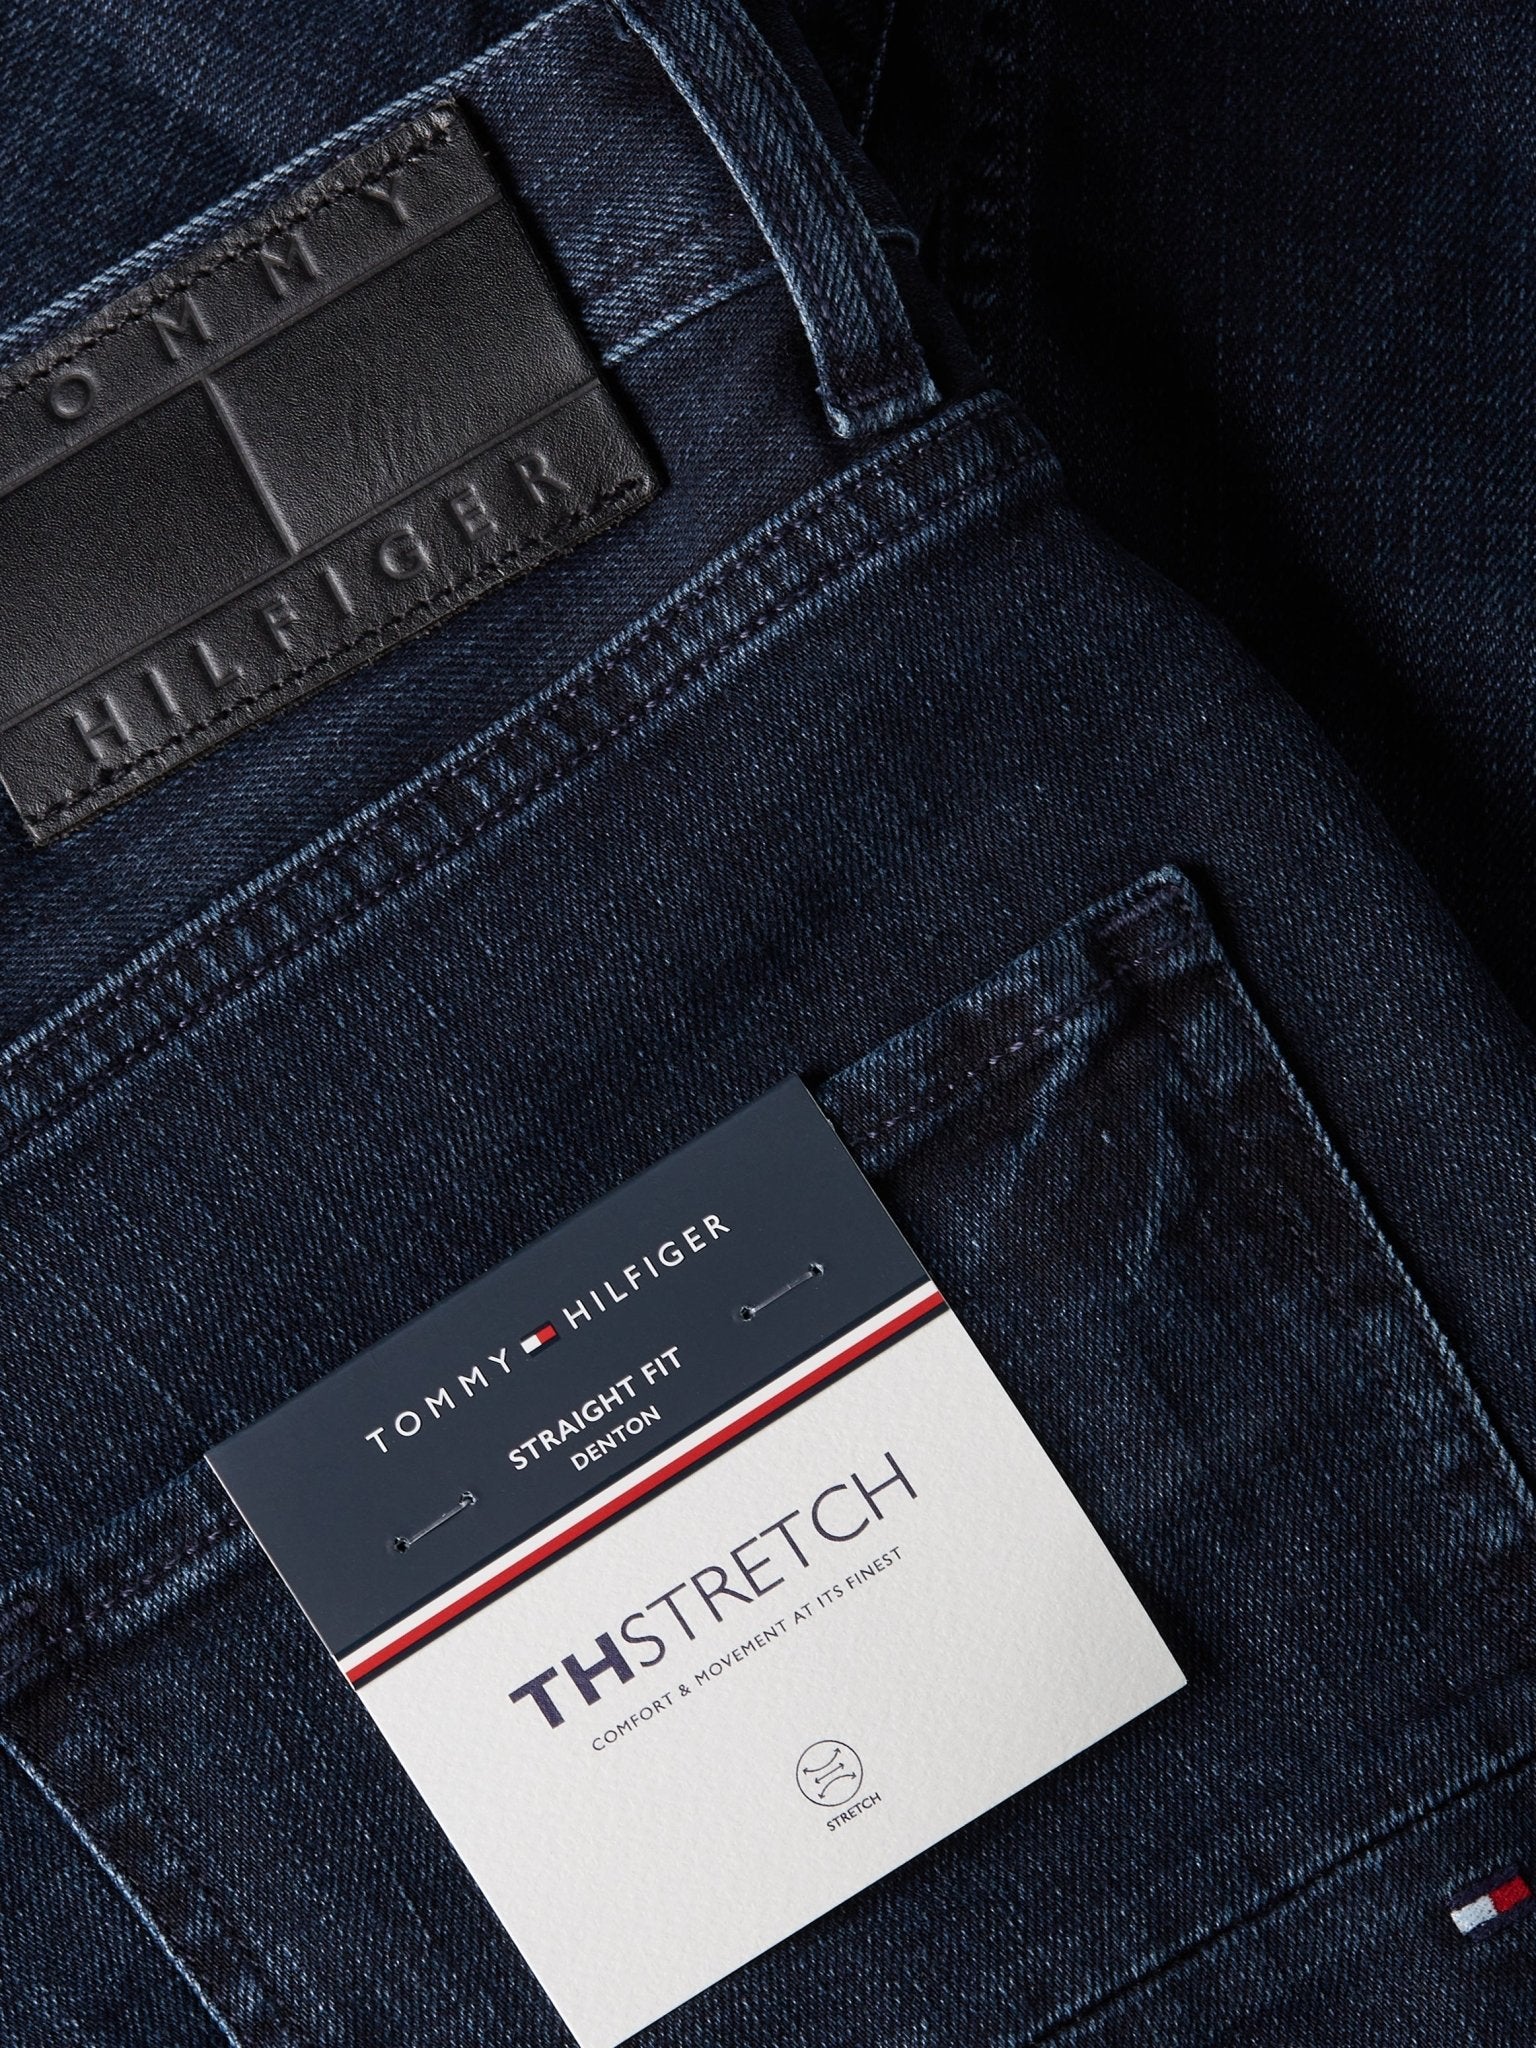 Tommy Hilfiger Denton Straight Jeans - Matt O'Brien Fashions